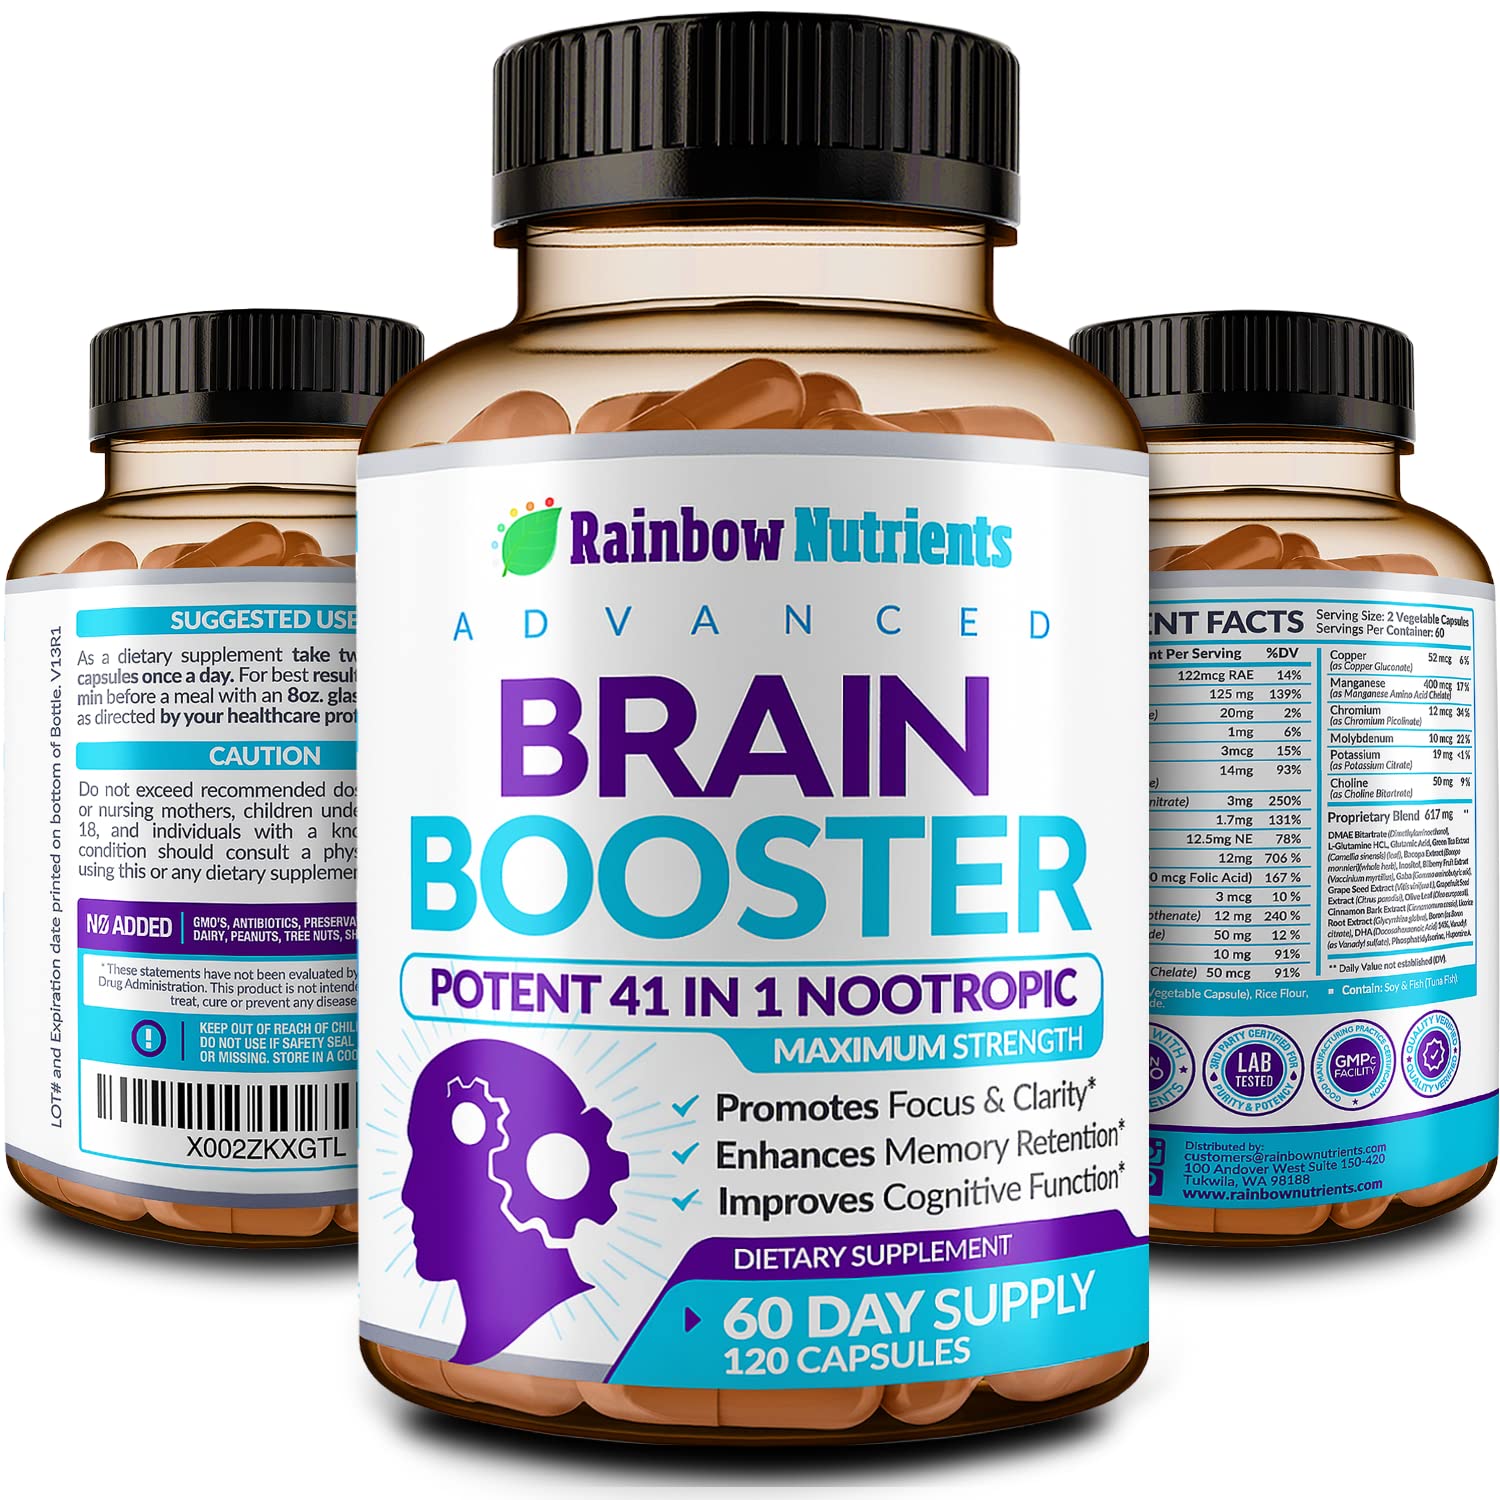 25 Best supplements for brain health